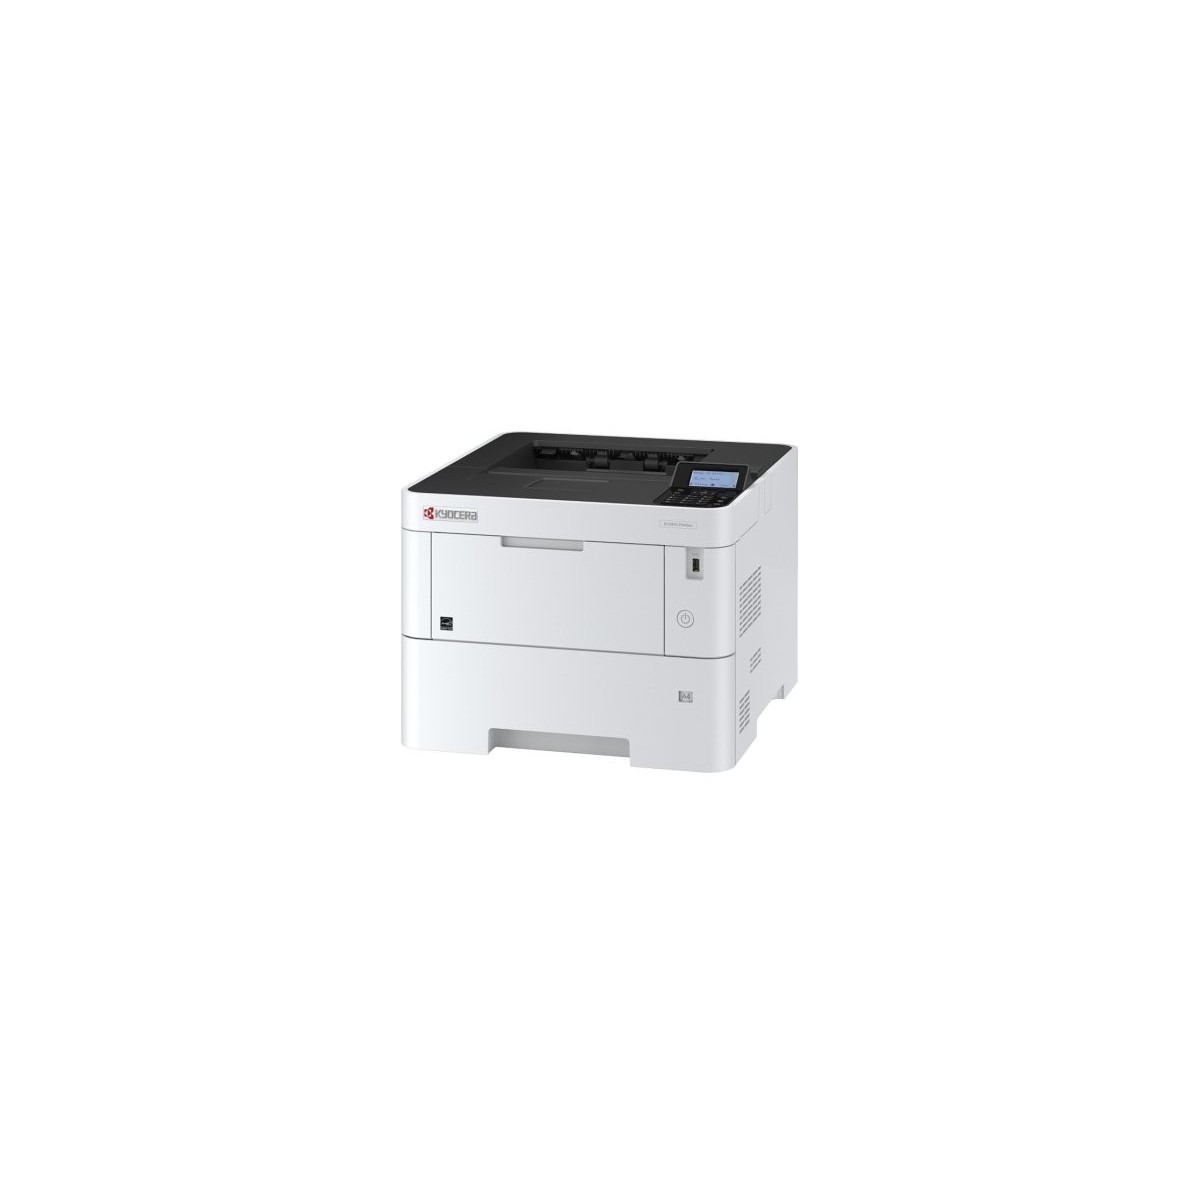 Kyocera ECOSYS P3155dn - Laser - 1200 x 1200 DPI - A4 - 55 ppm - Duplex printing - Network ready